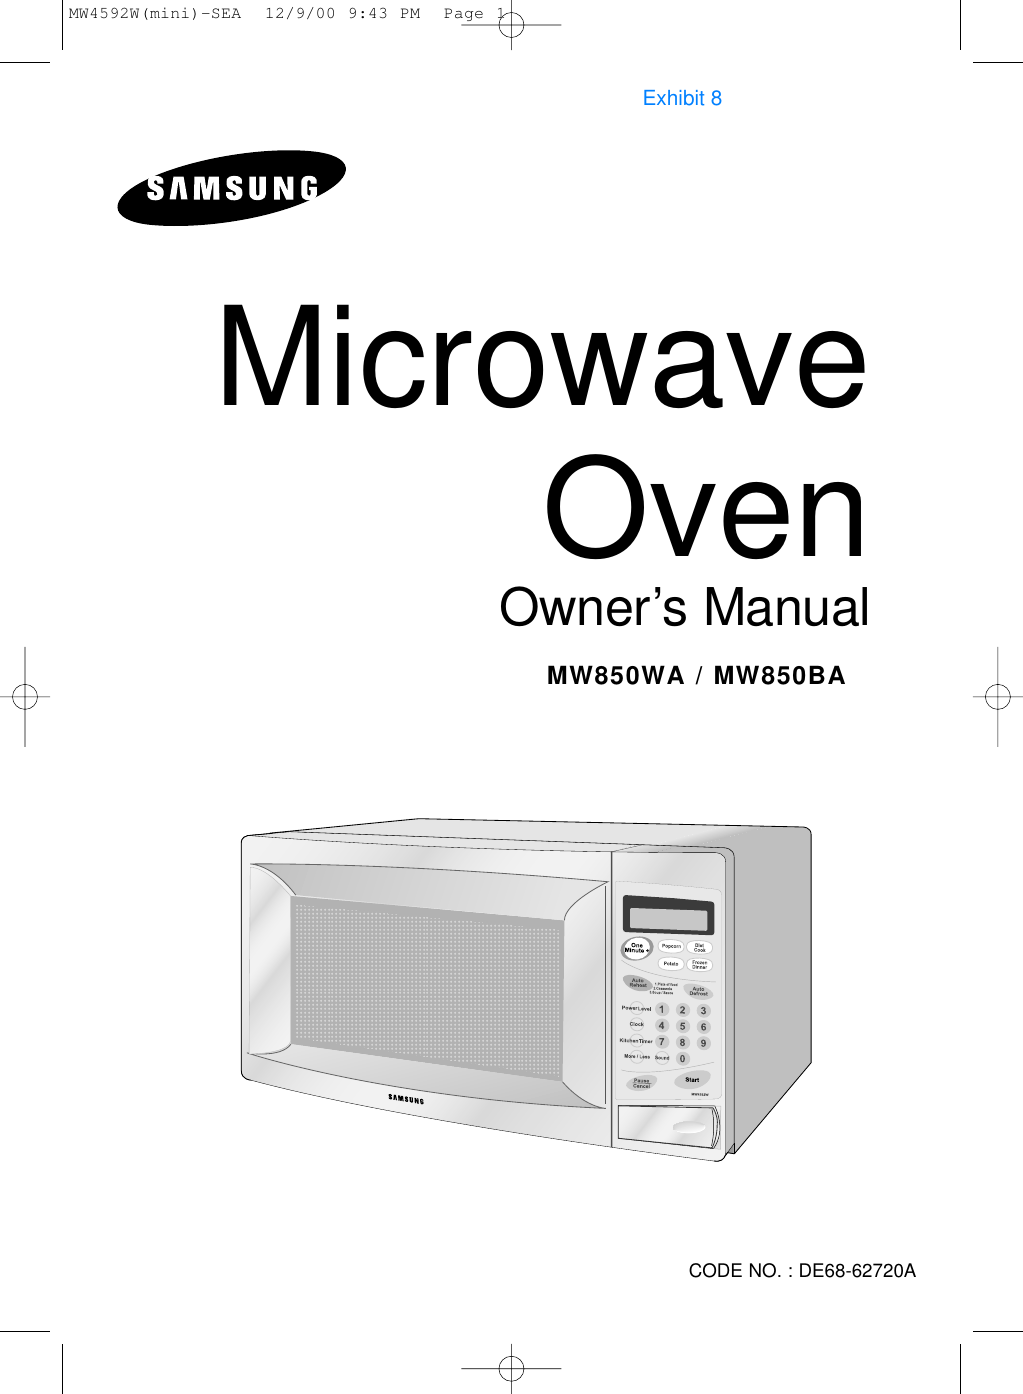 Microwave OvenOwner’s ManualMW850WA / MW850BACODE NO. : DE68-62720AMW4592W(mini)-SEA  12/9/00 9:43 PM  Page 1Exhibit 8